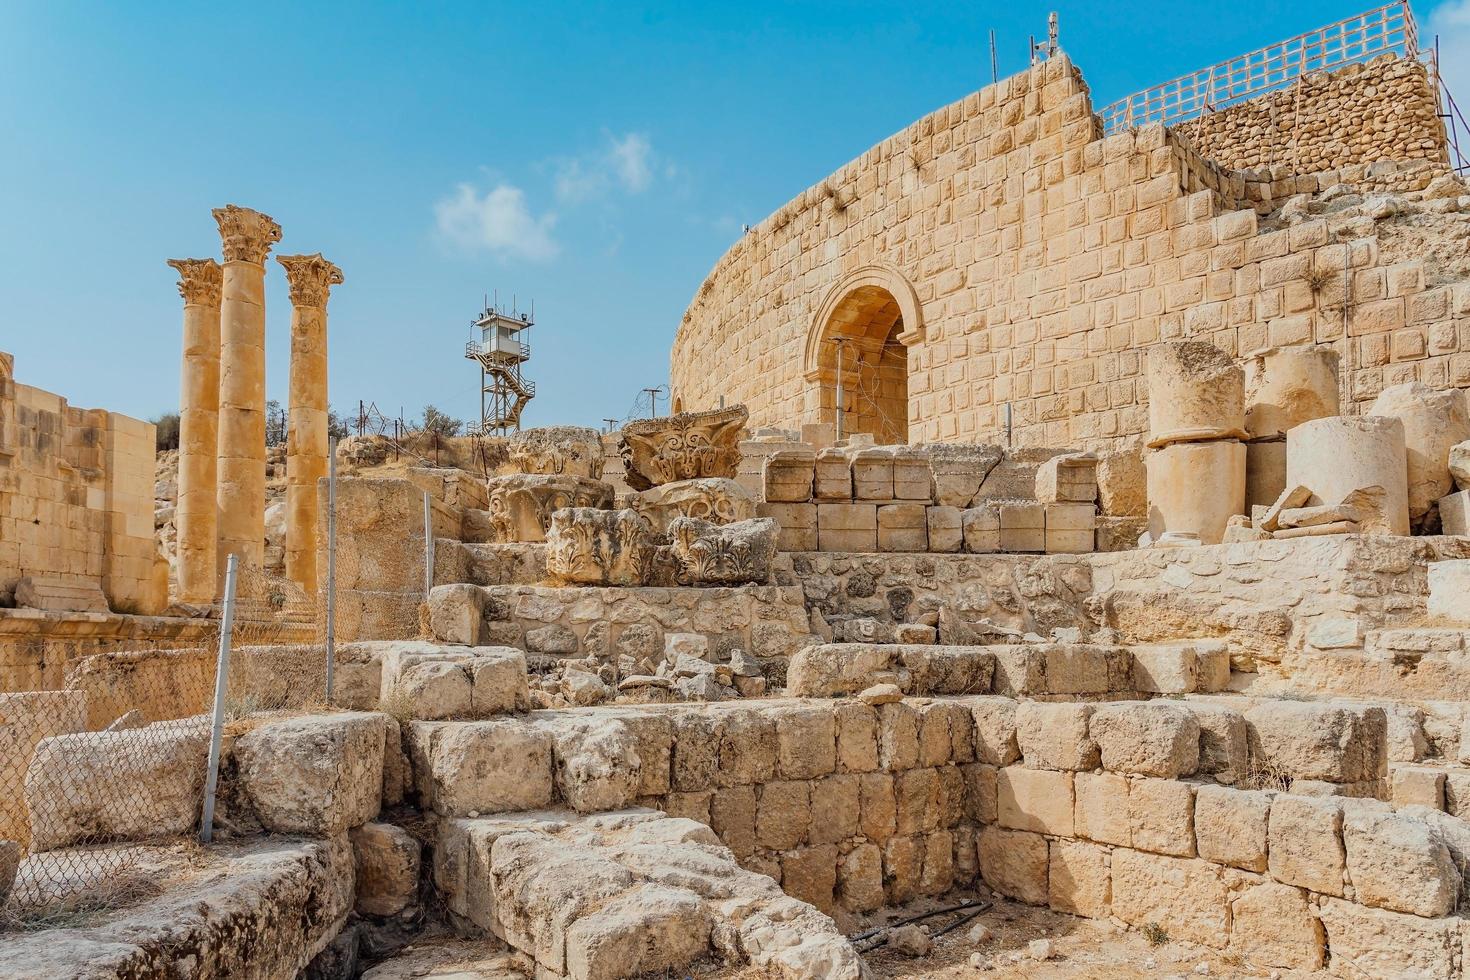 artemis tempel i gerasa, dagens jerash, jordanien foto